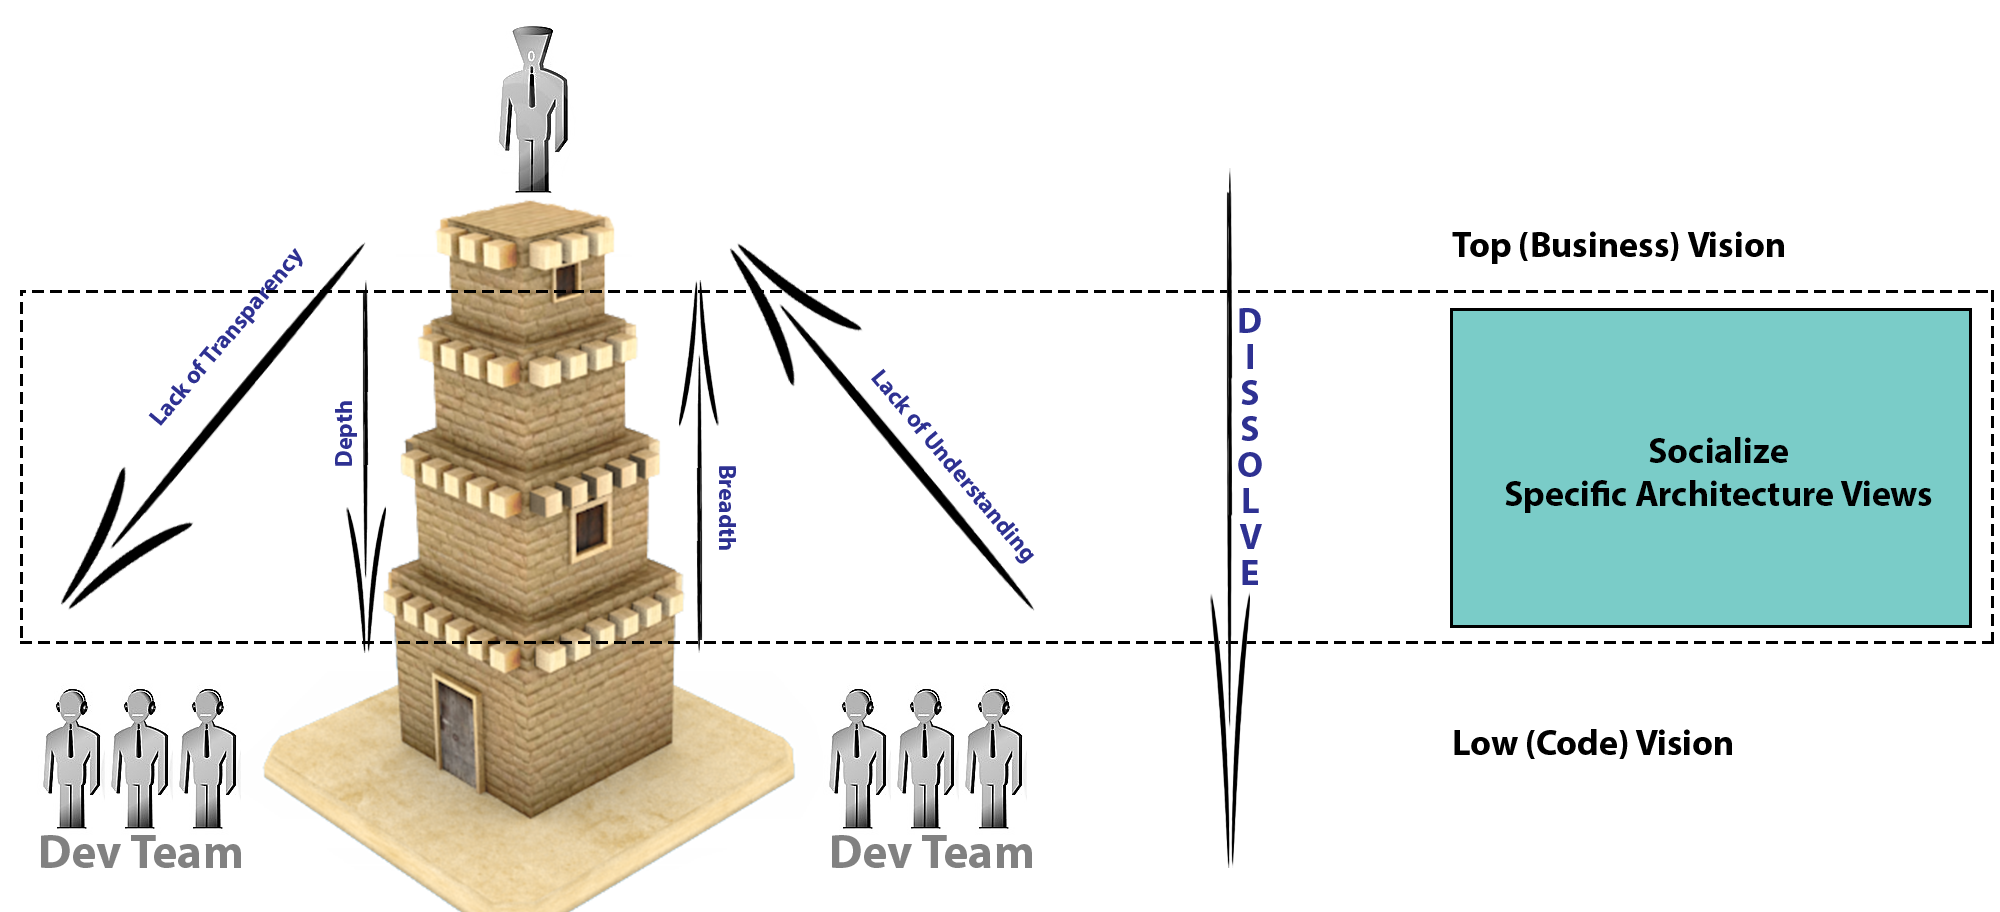 architect ivory tower dissolve